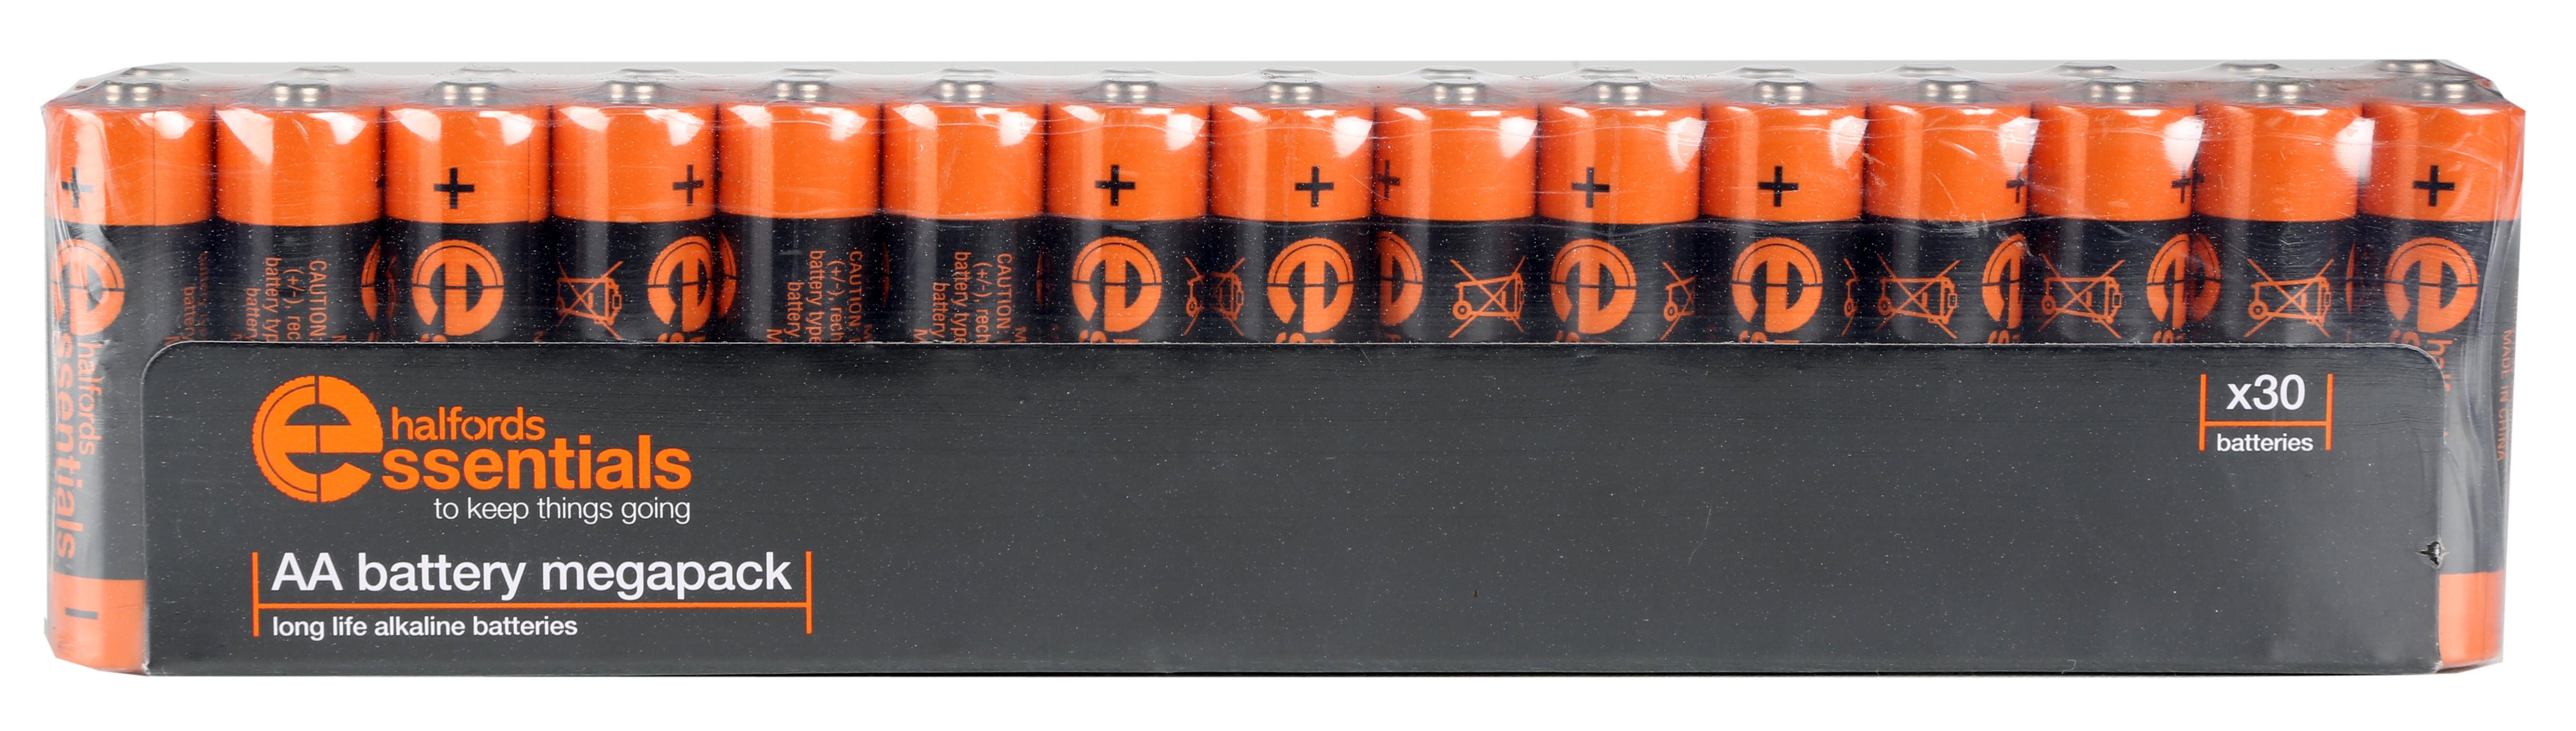 Halfords Essential Batteries Aa X30